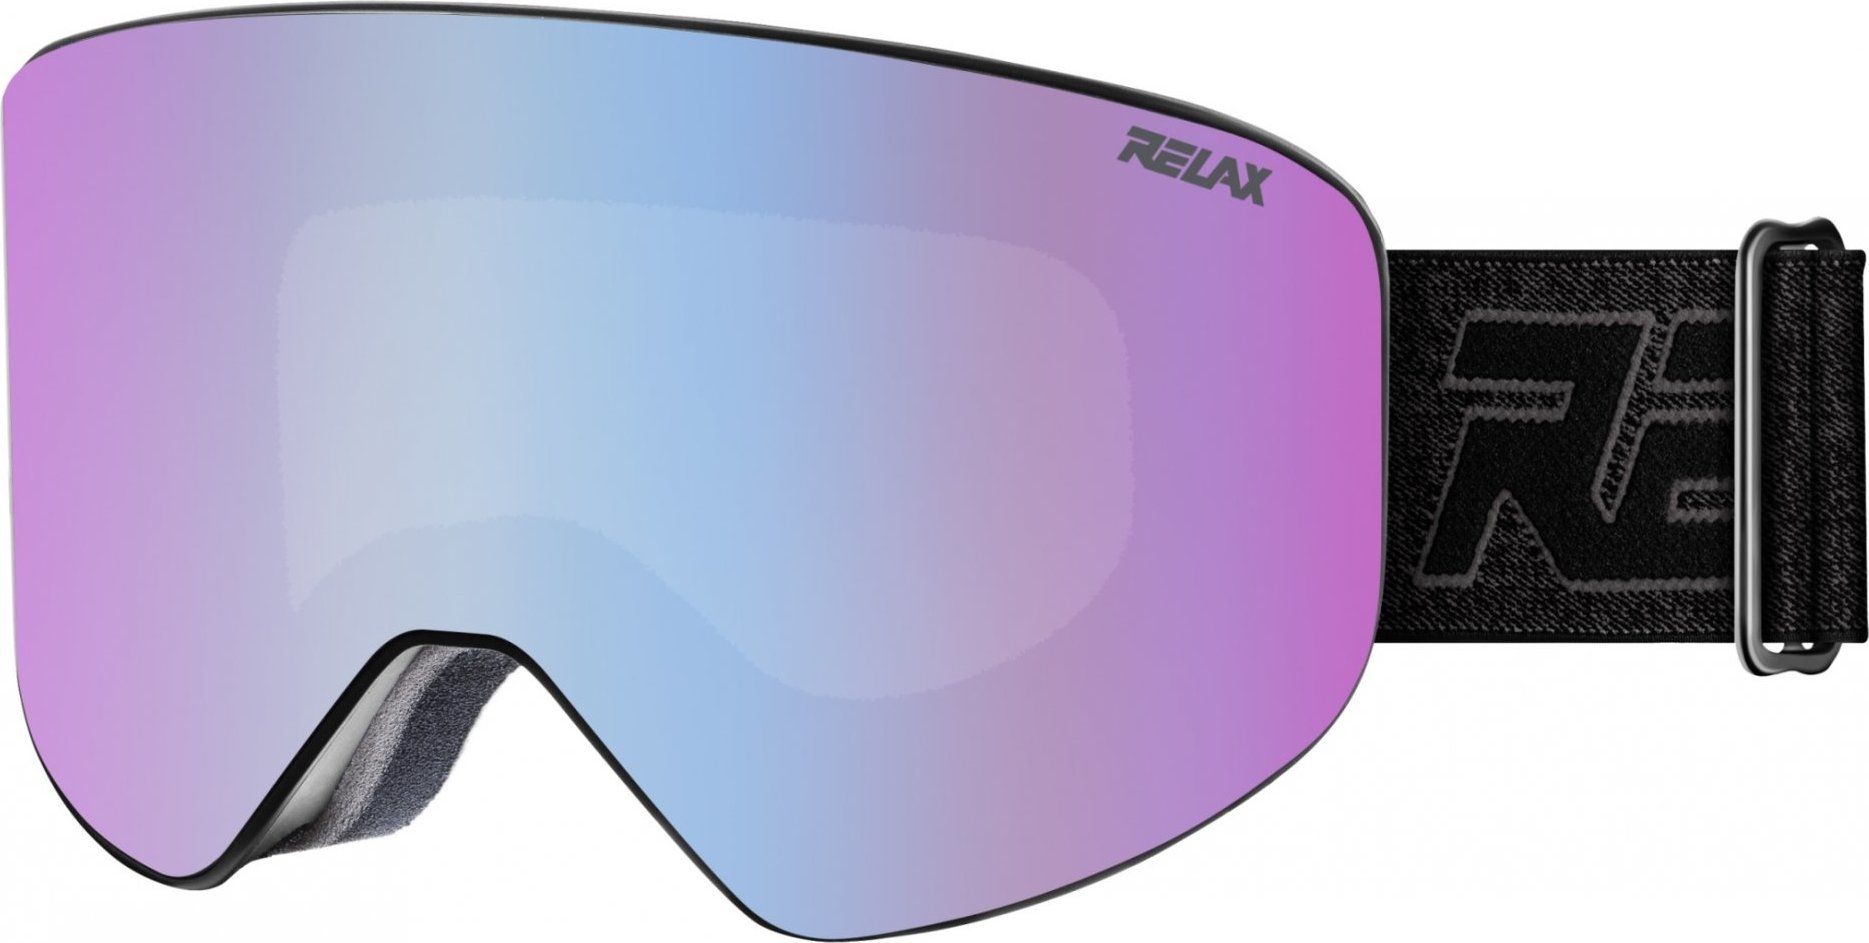 Lyžařské brýle RELAX Scooper růžové